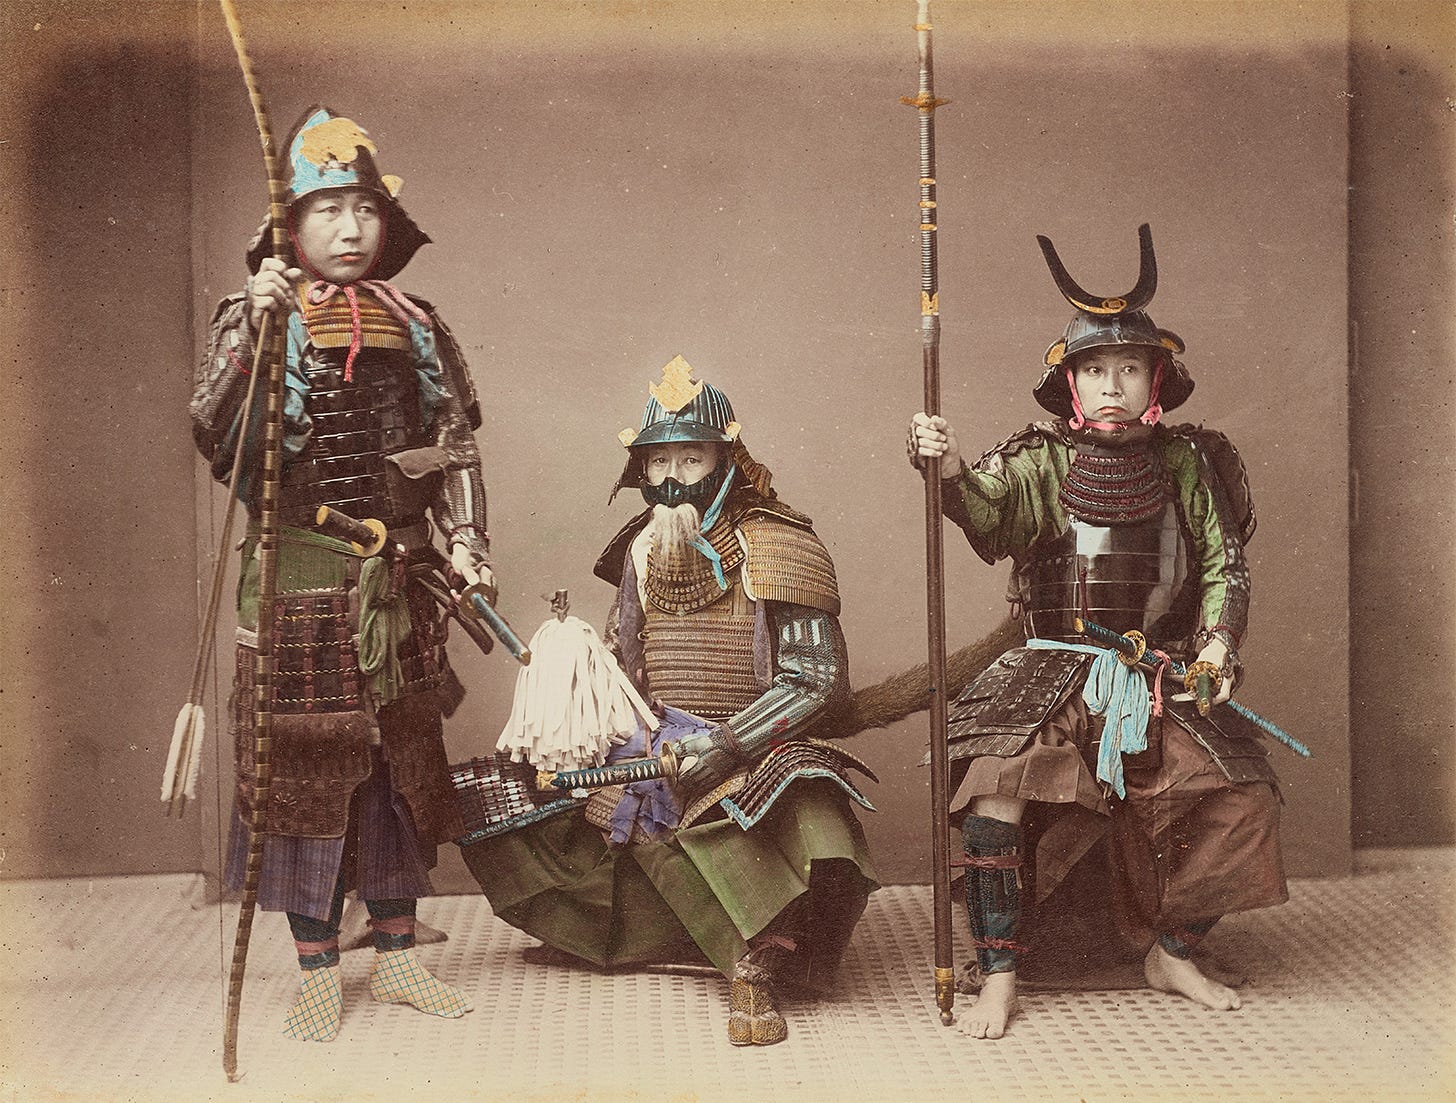 https://upload.wikimedia.org/wikipedia/commons/7/7f/Samurai-in-Armour-by-Kusakabe-Kimbei.png